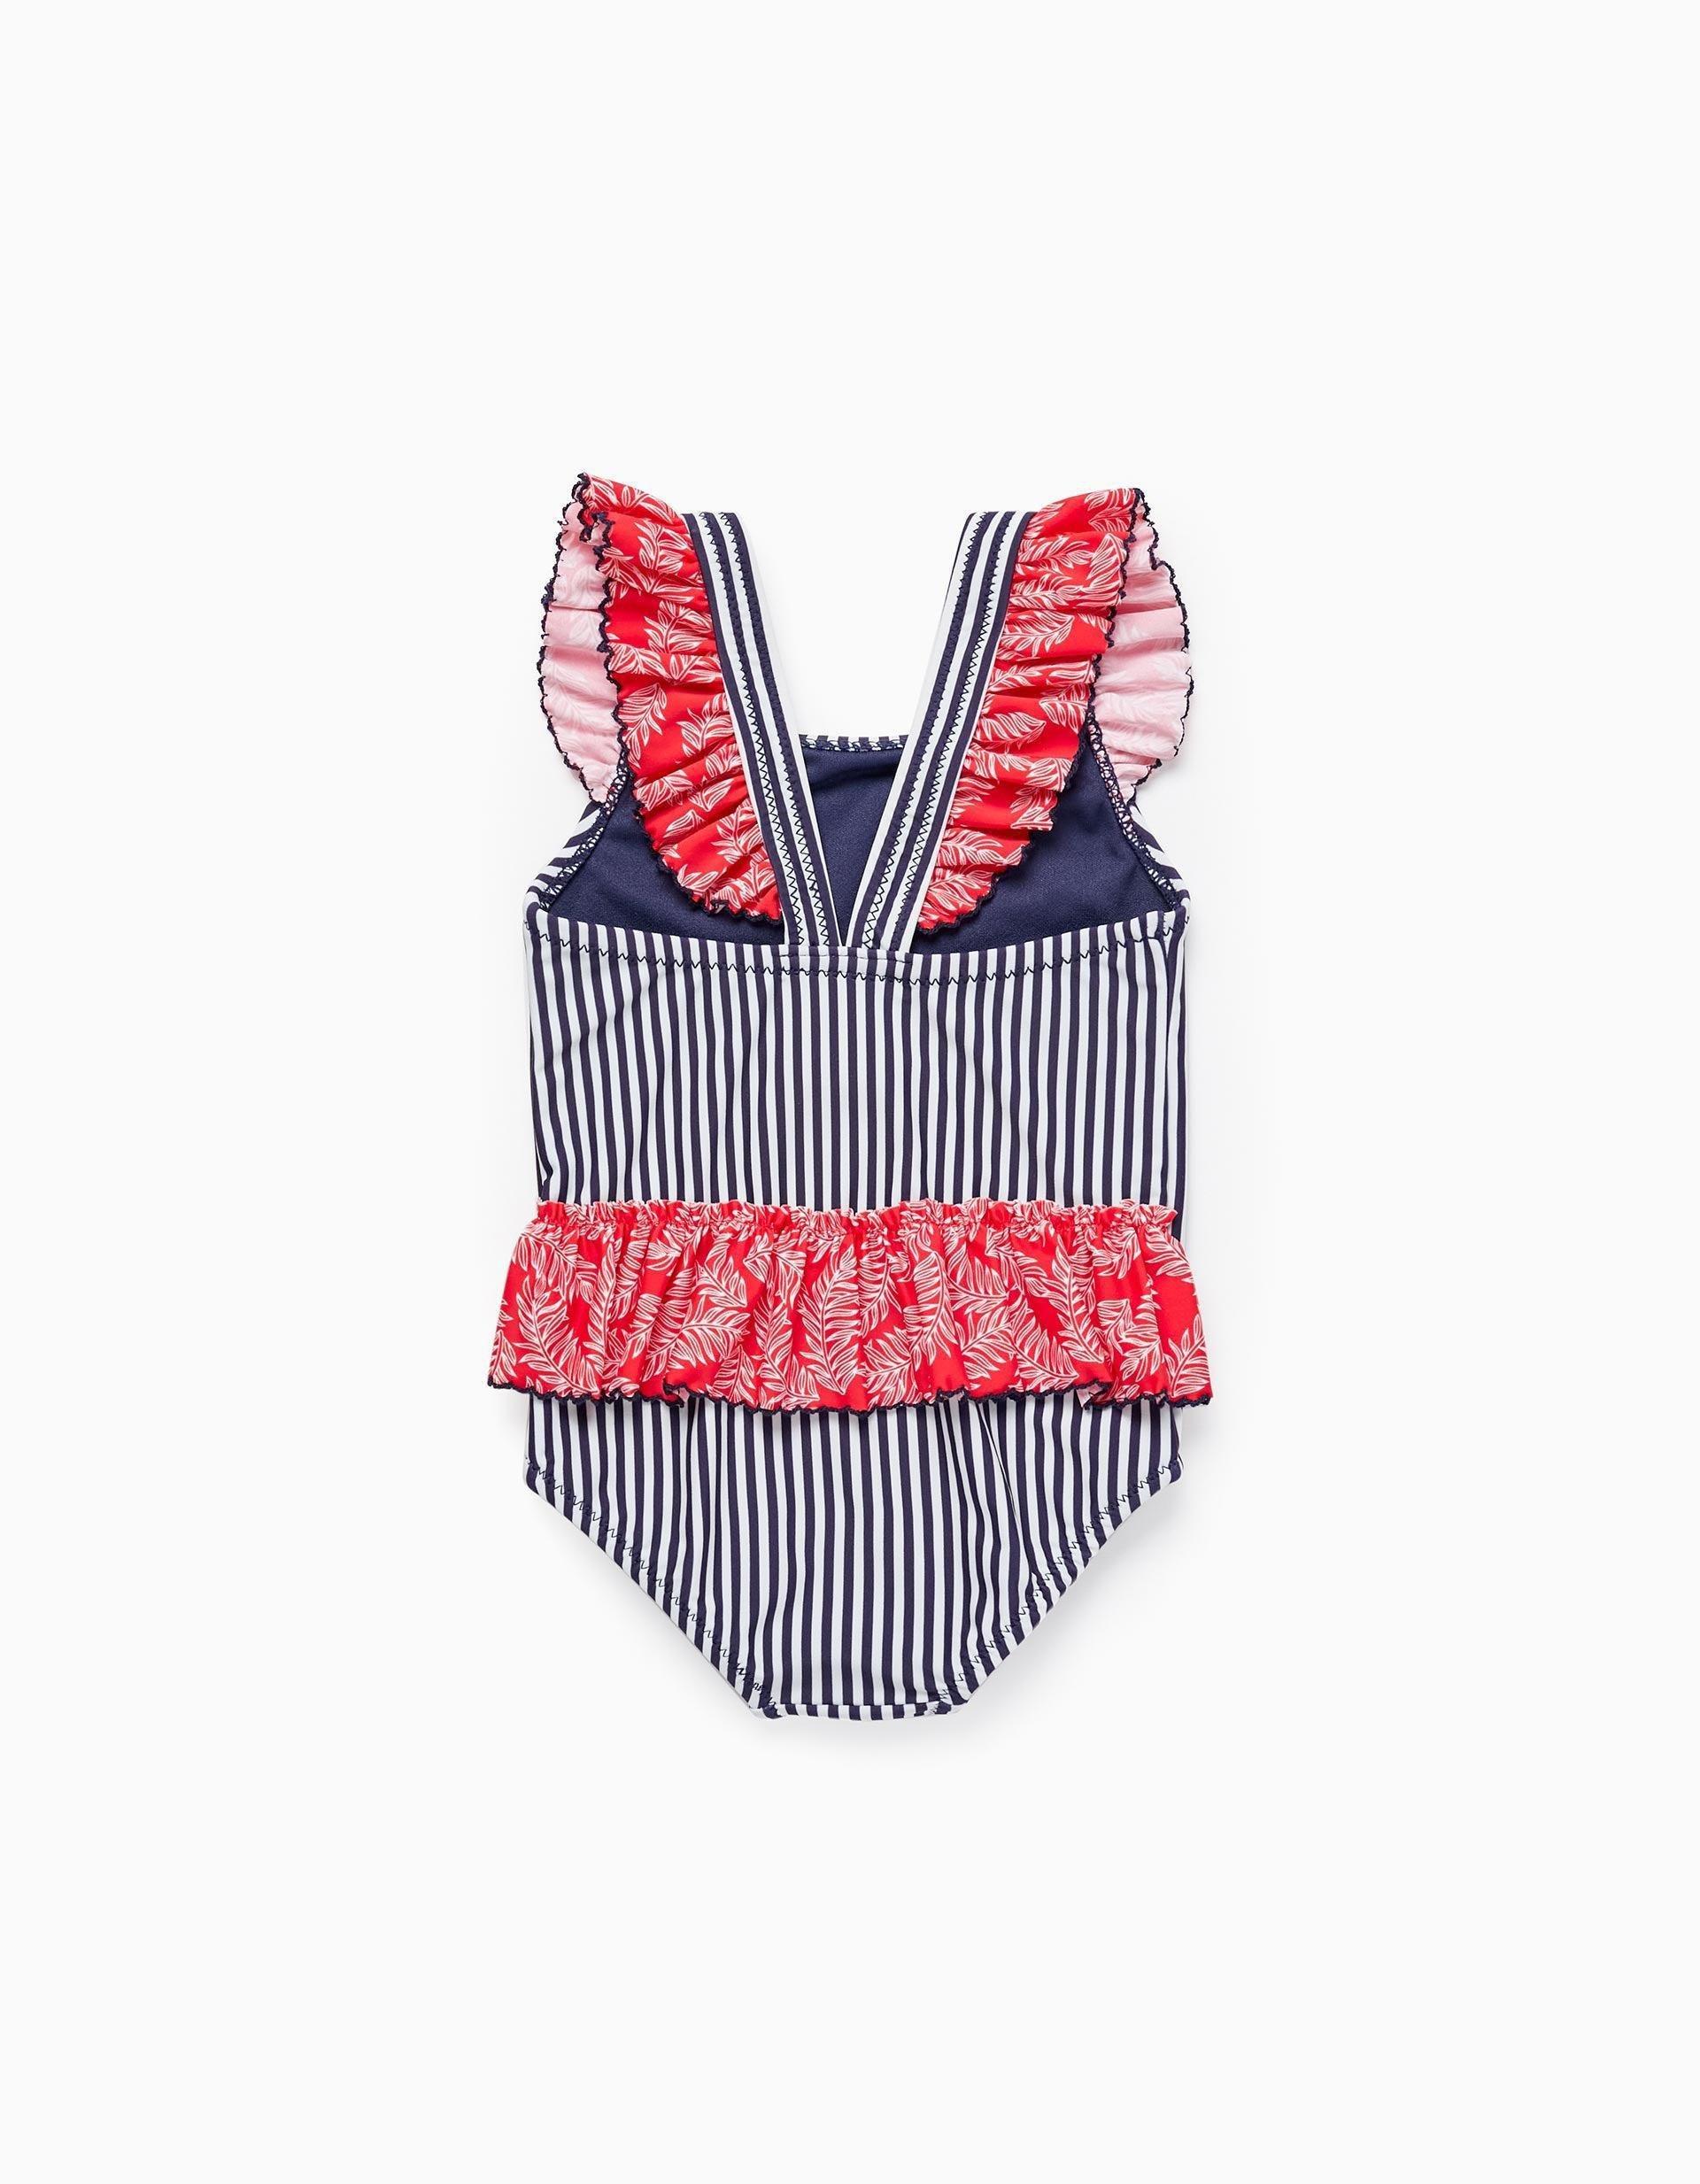 Gant - Multicolour Striped Swimsuit, Baby Girls